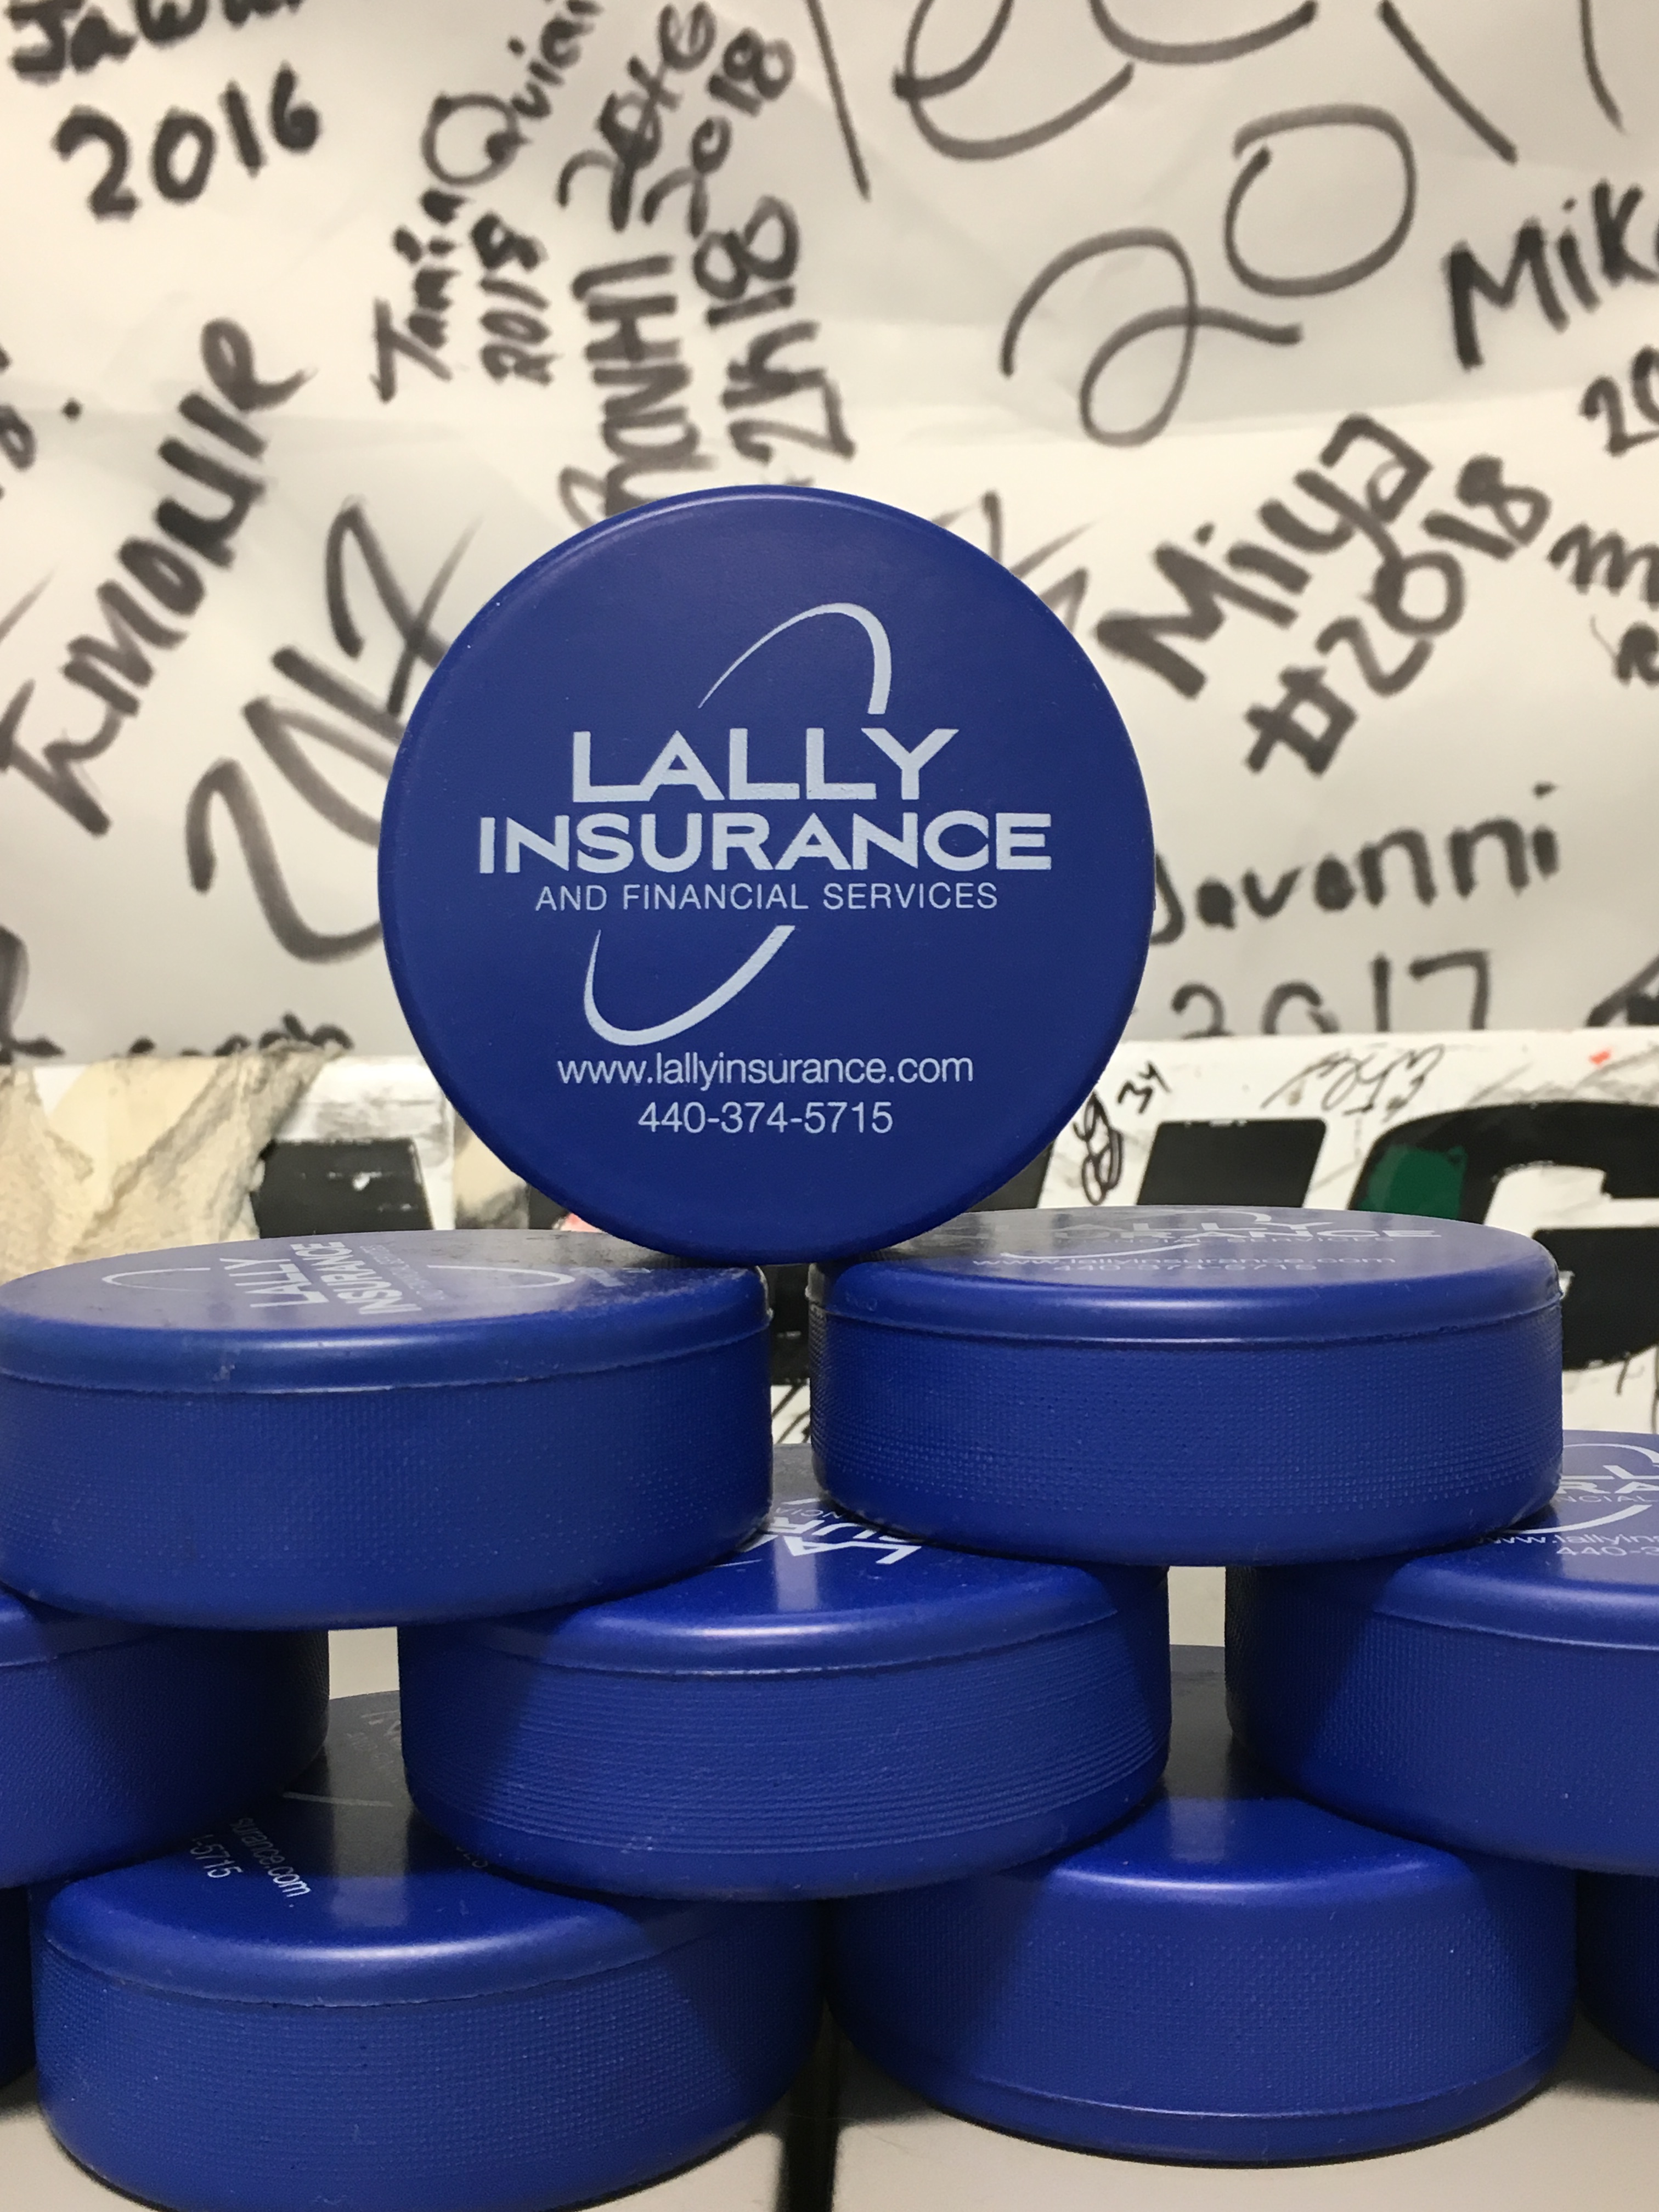 Lally Insurance Agency: Allstate Insurance Photo